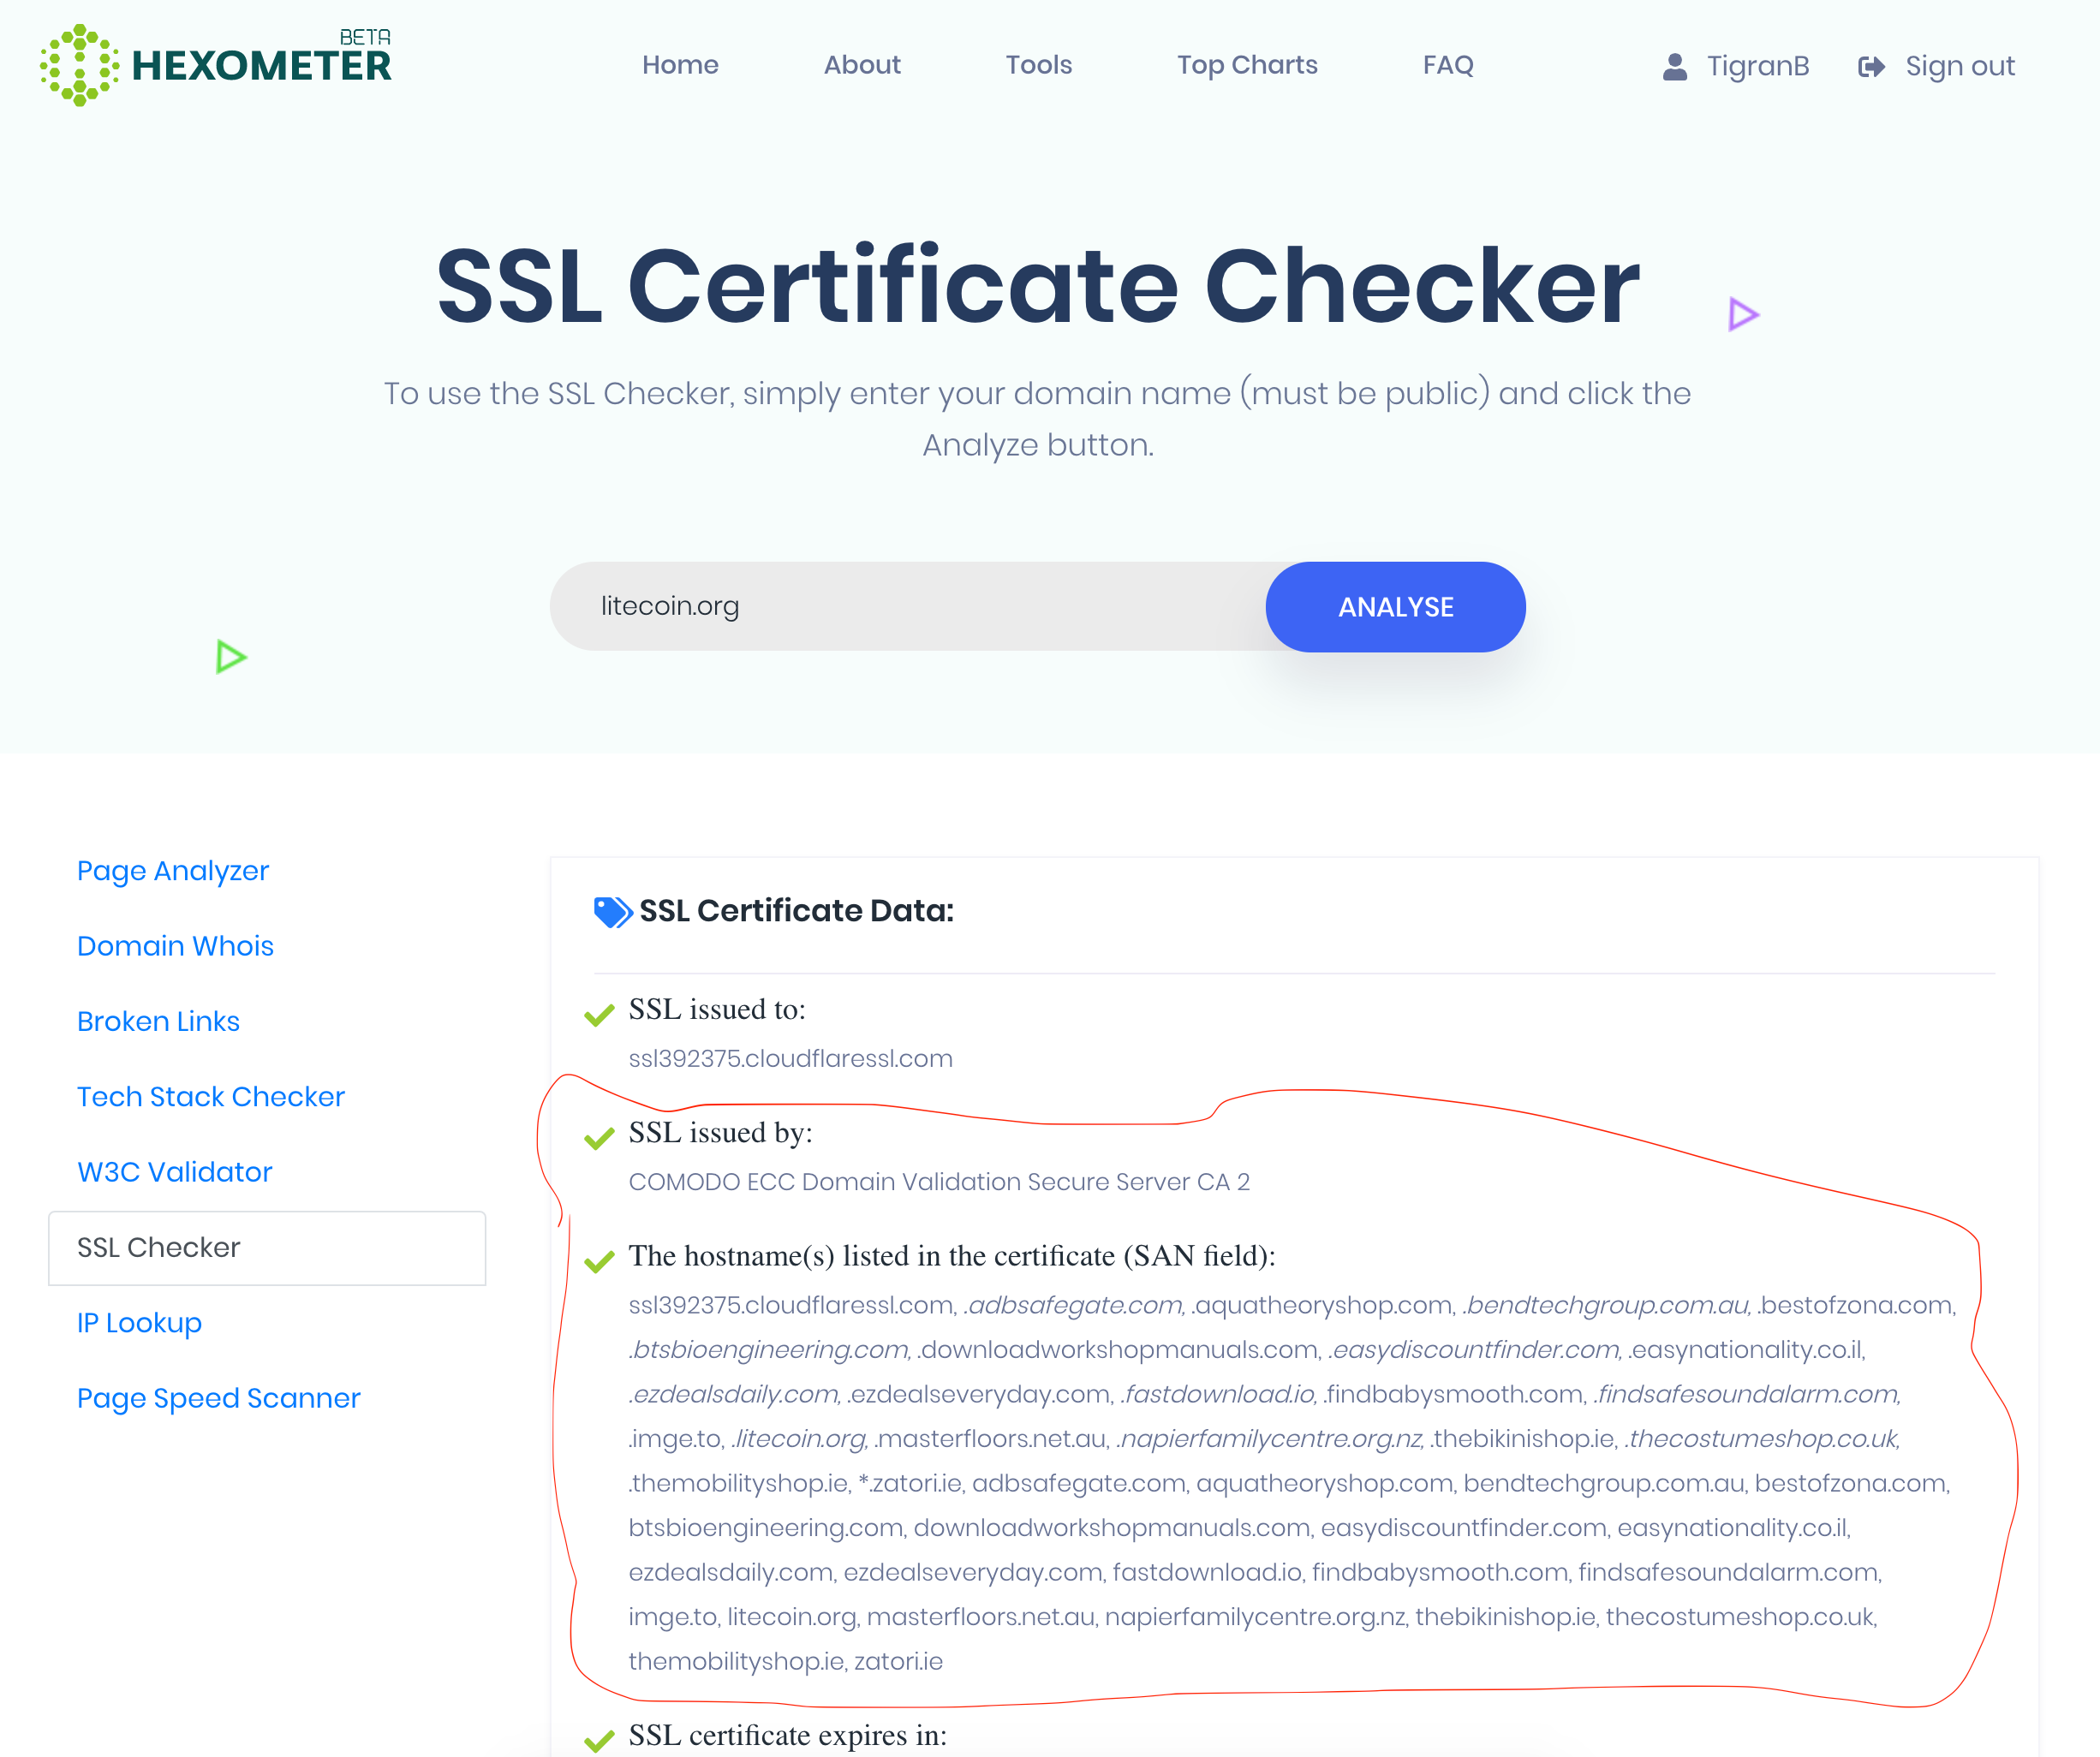 <a href="https://hexometer.com/ssl-certificate-checker/litecoin.org">https://hexometer.com/ssl-certificate-checker/litecoin.org</a>